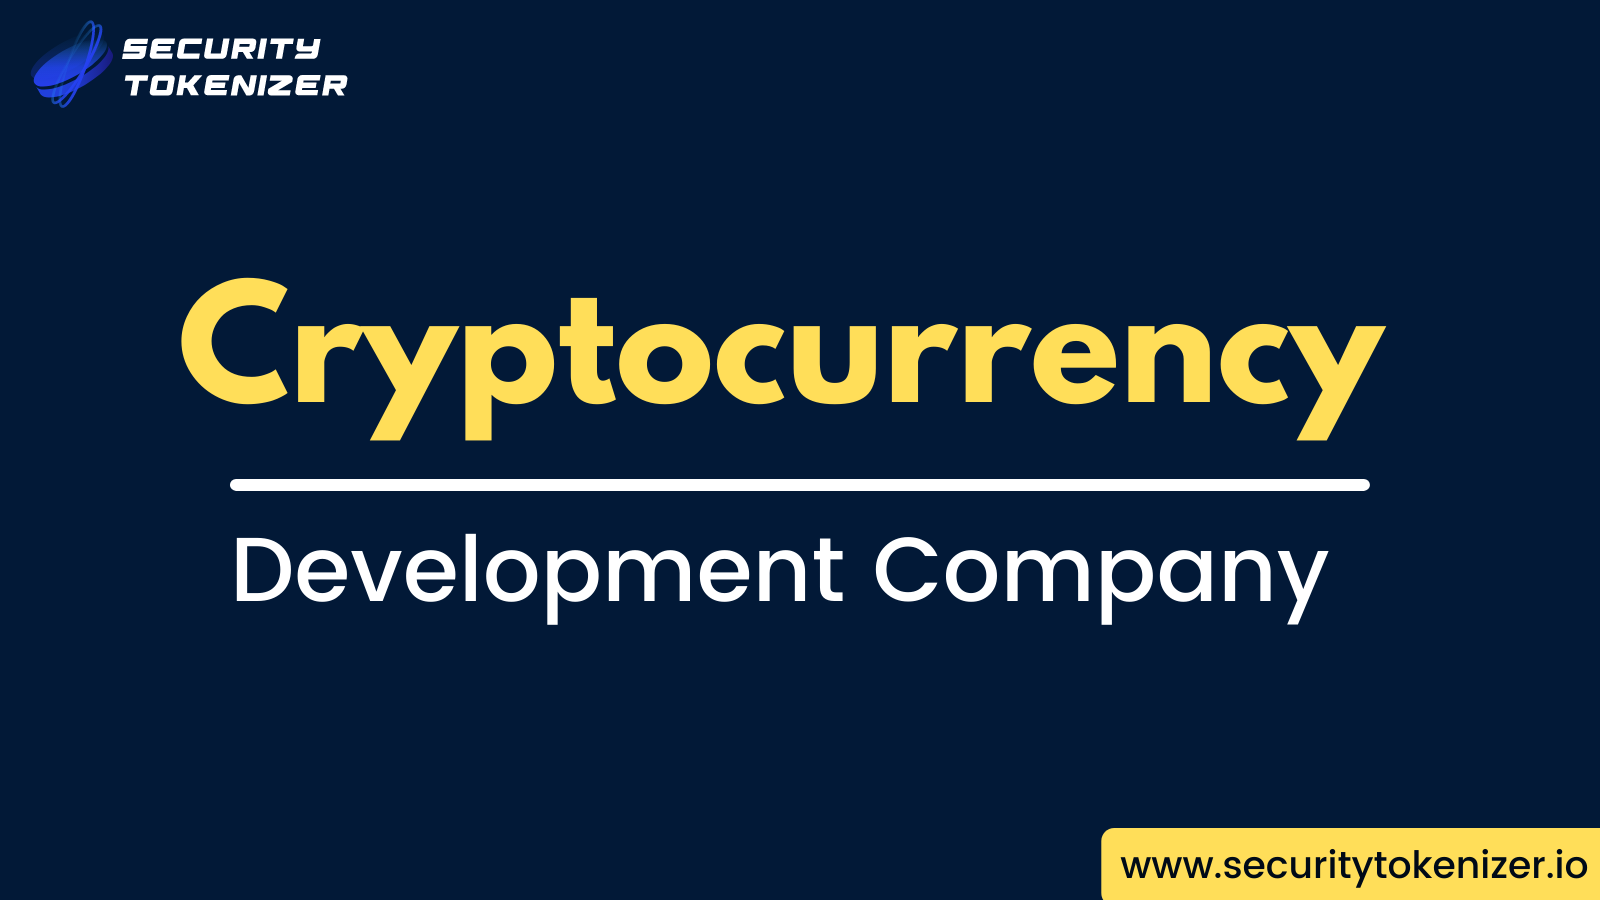 Cryptocurrency Development Company - Security Tokenizer